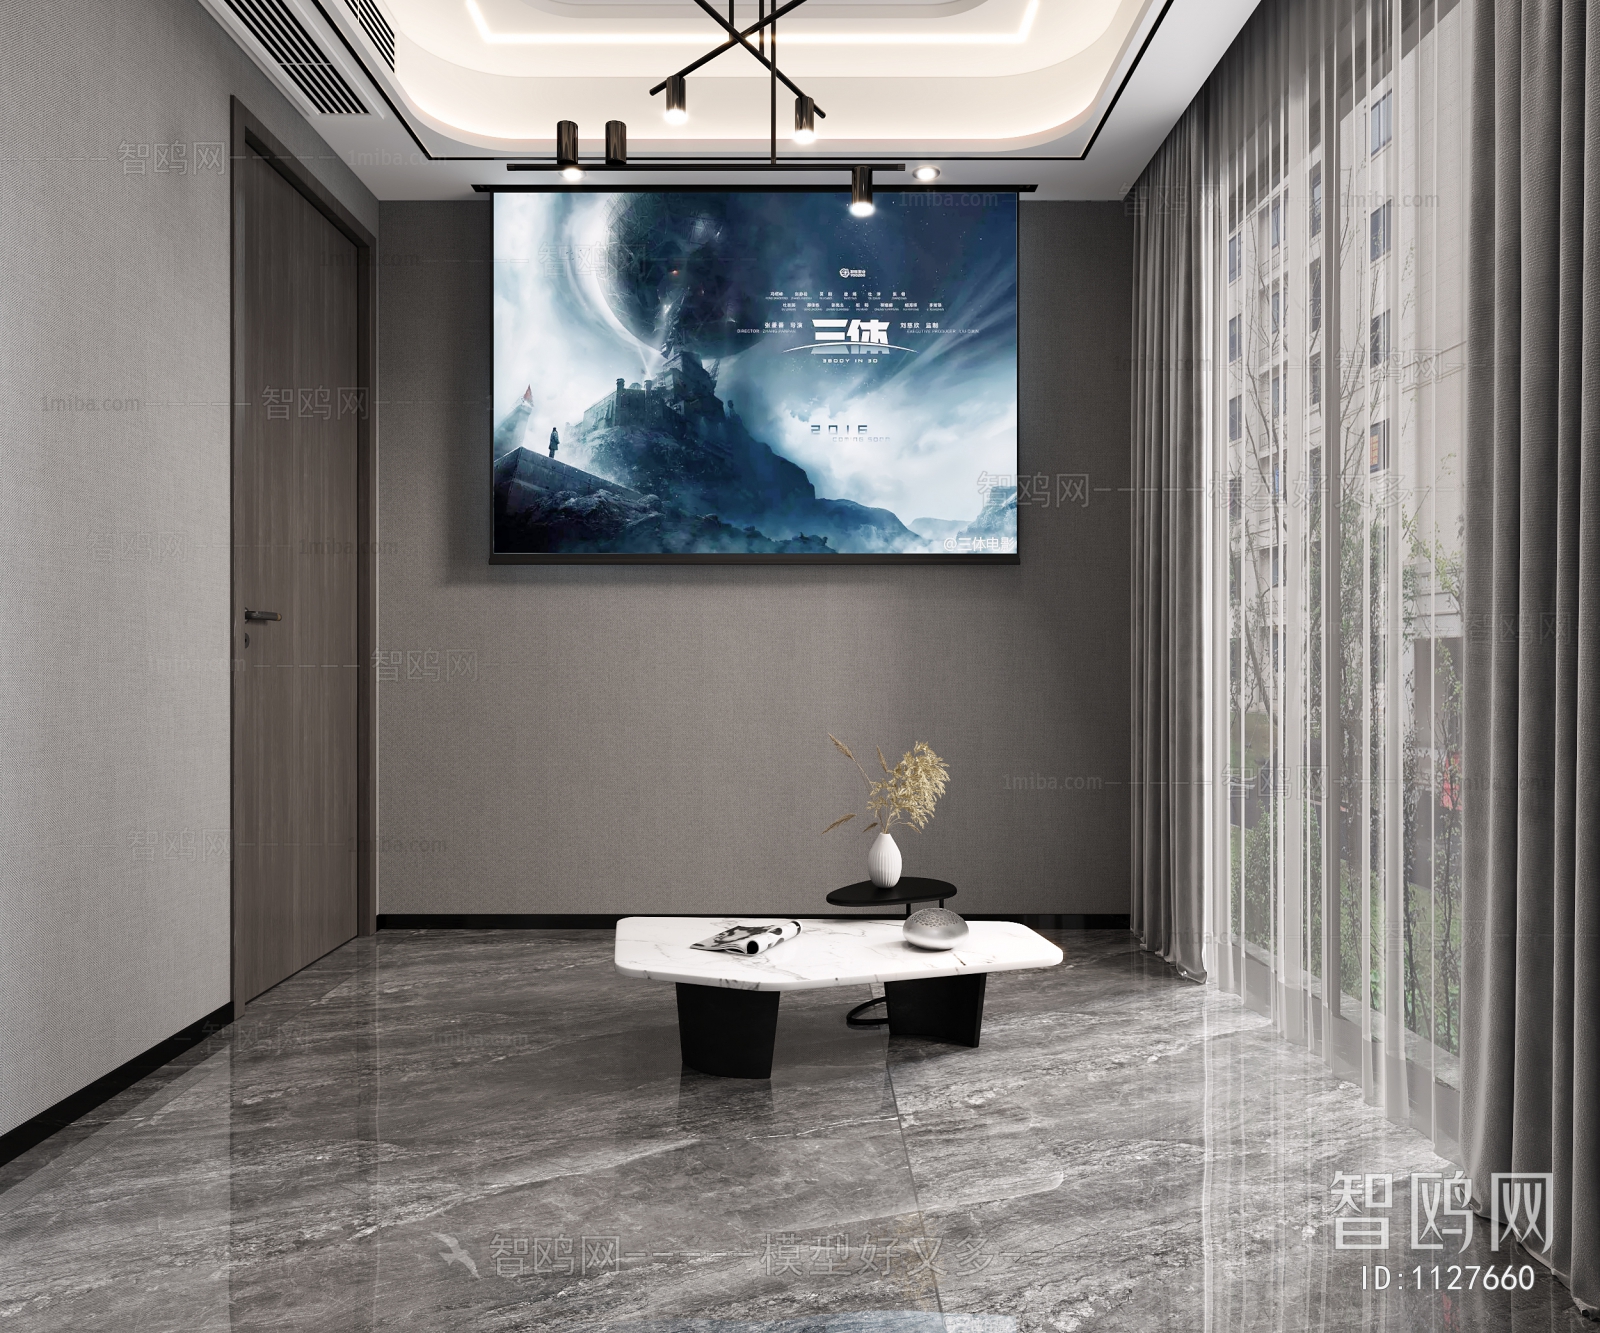 Modern Audiovisual Room